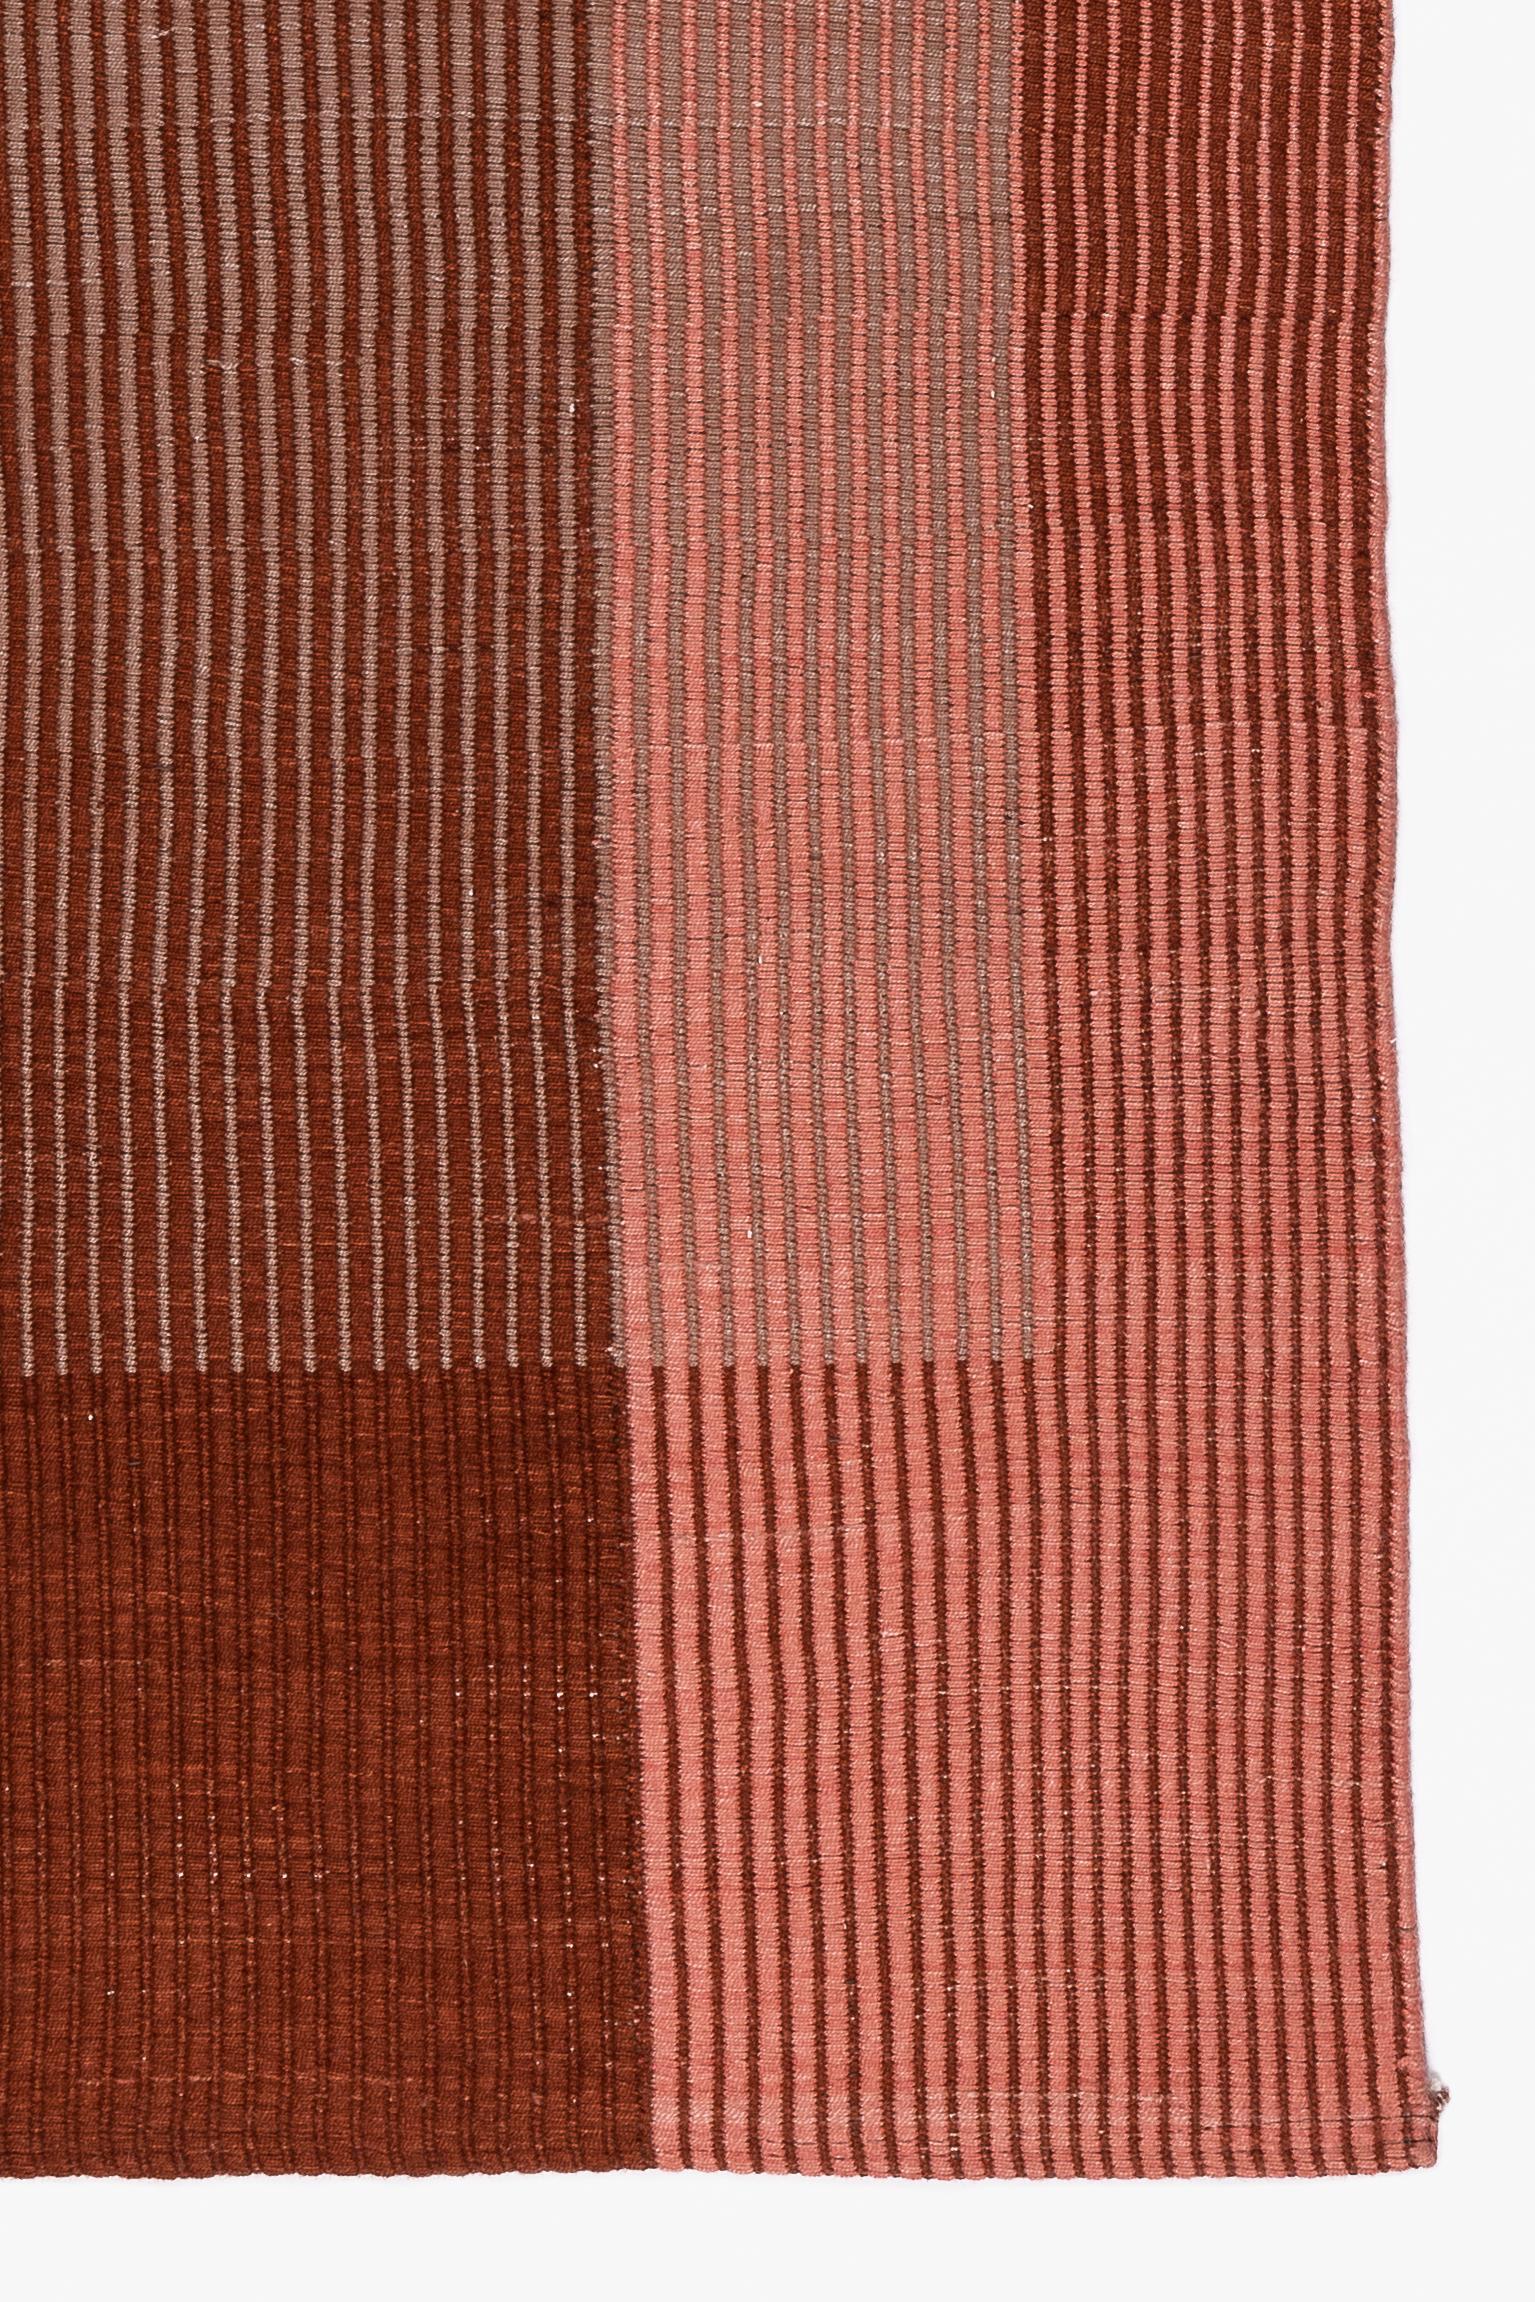 Modern Haze Editions Contemporary Kilim Runner Wool Handwoven Terracotta Red